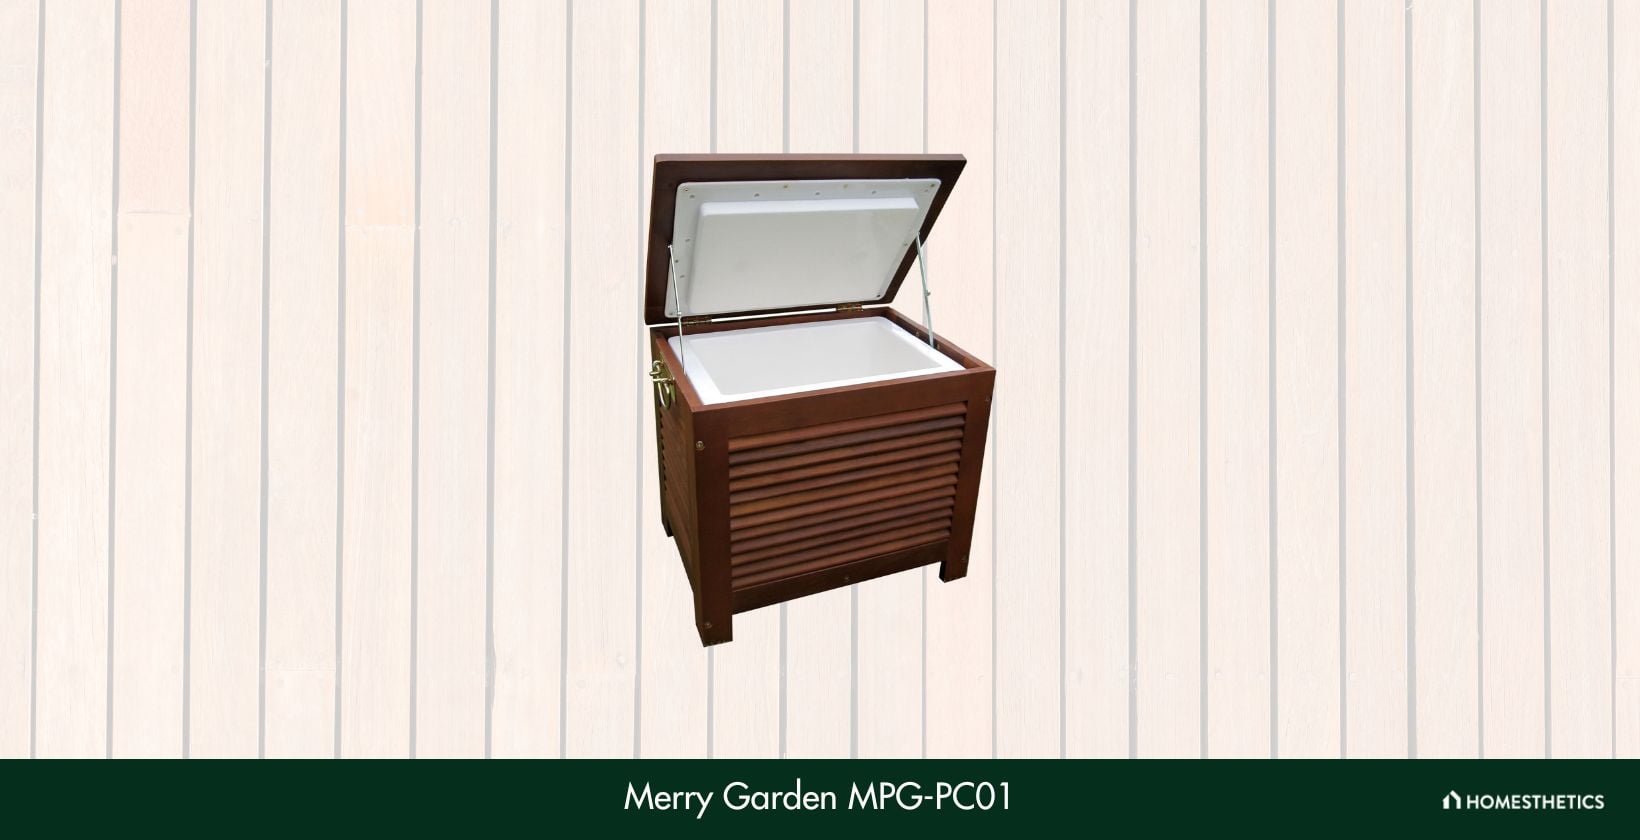 Merry Garden MPG PC01